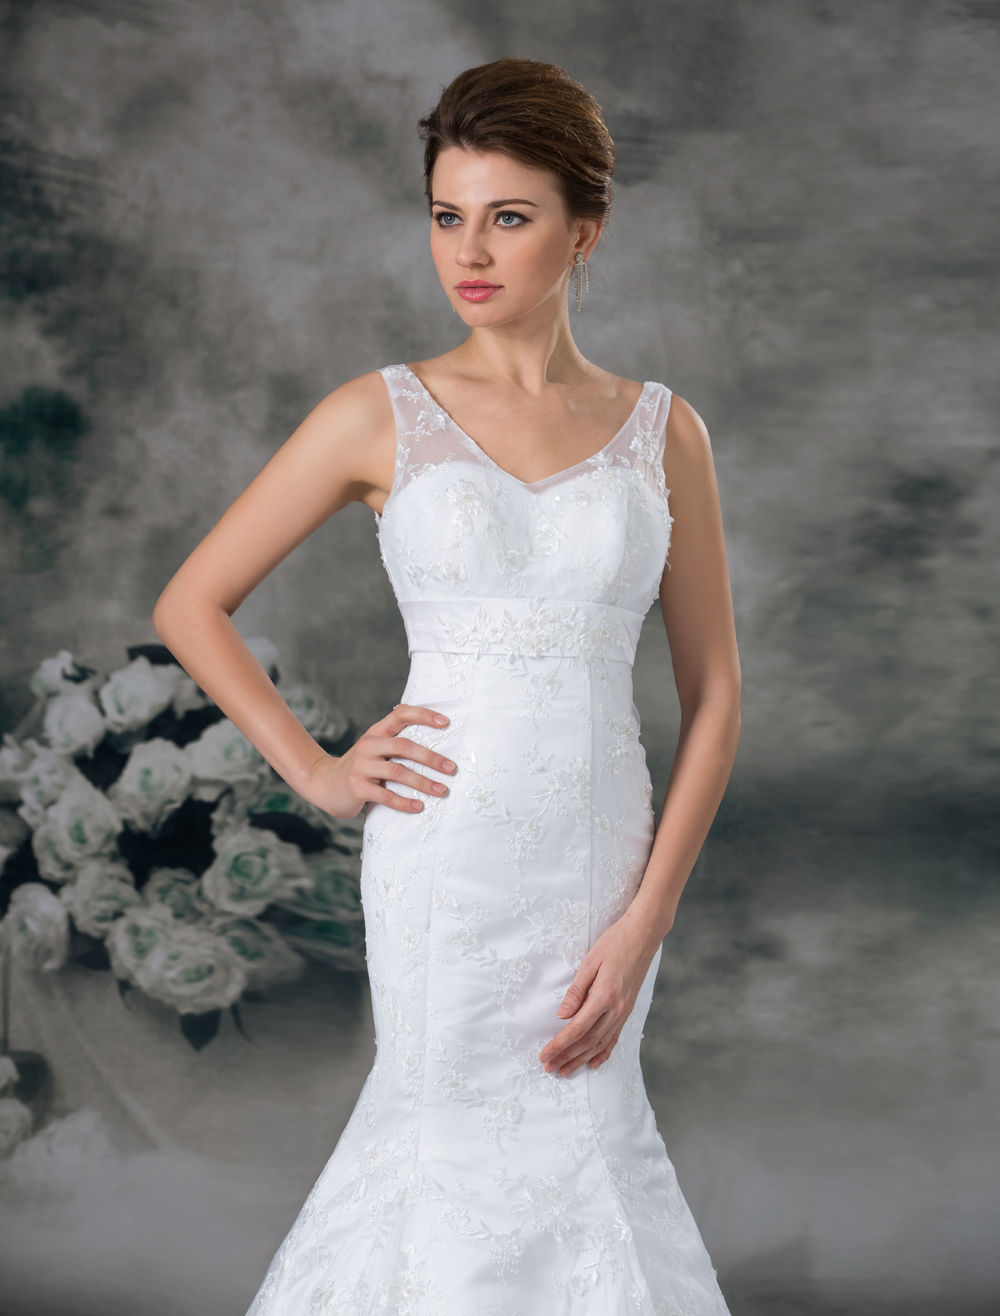 White Mermaid Off-The-Shoulder Lace Wedding Dress For Bride - Milanoo.com